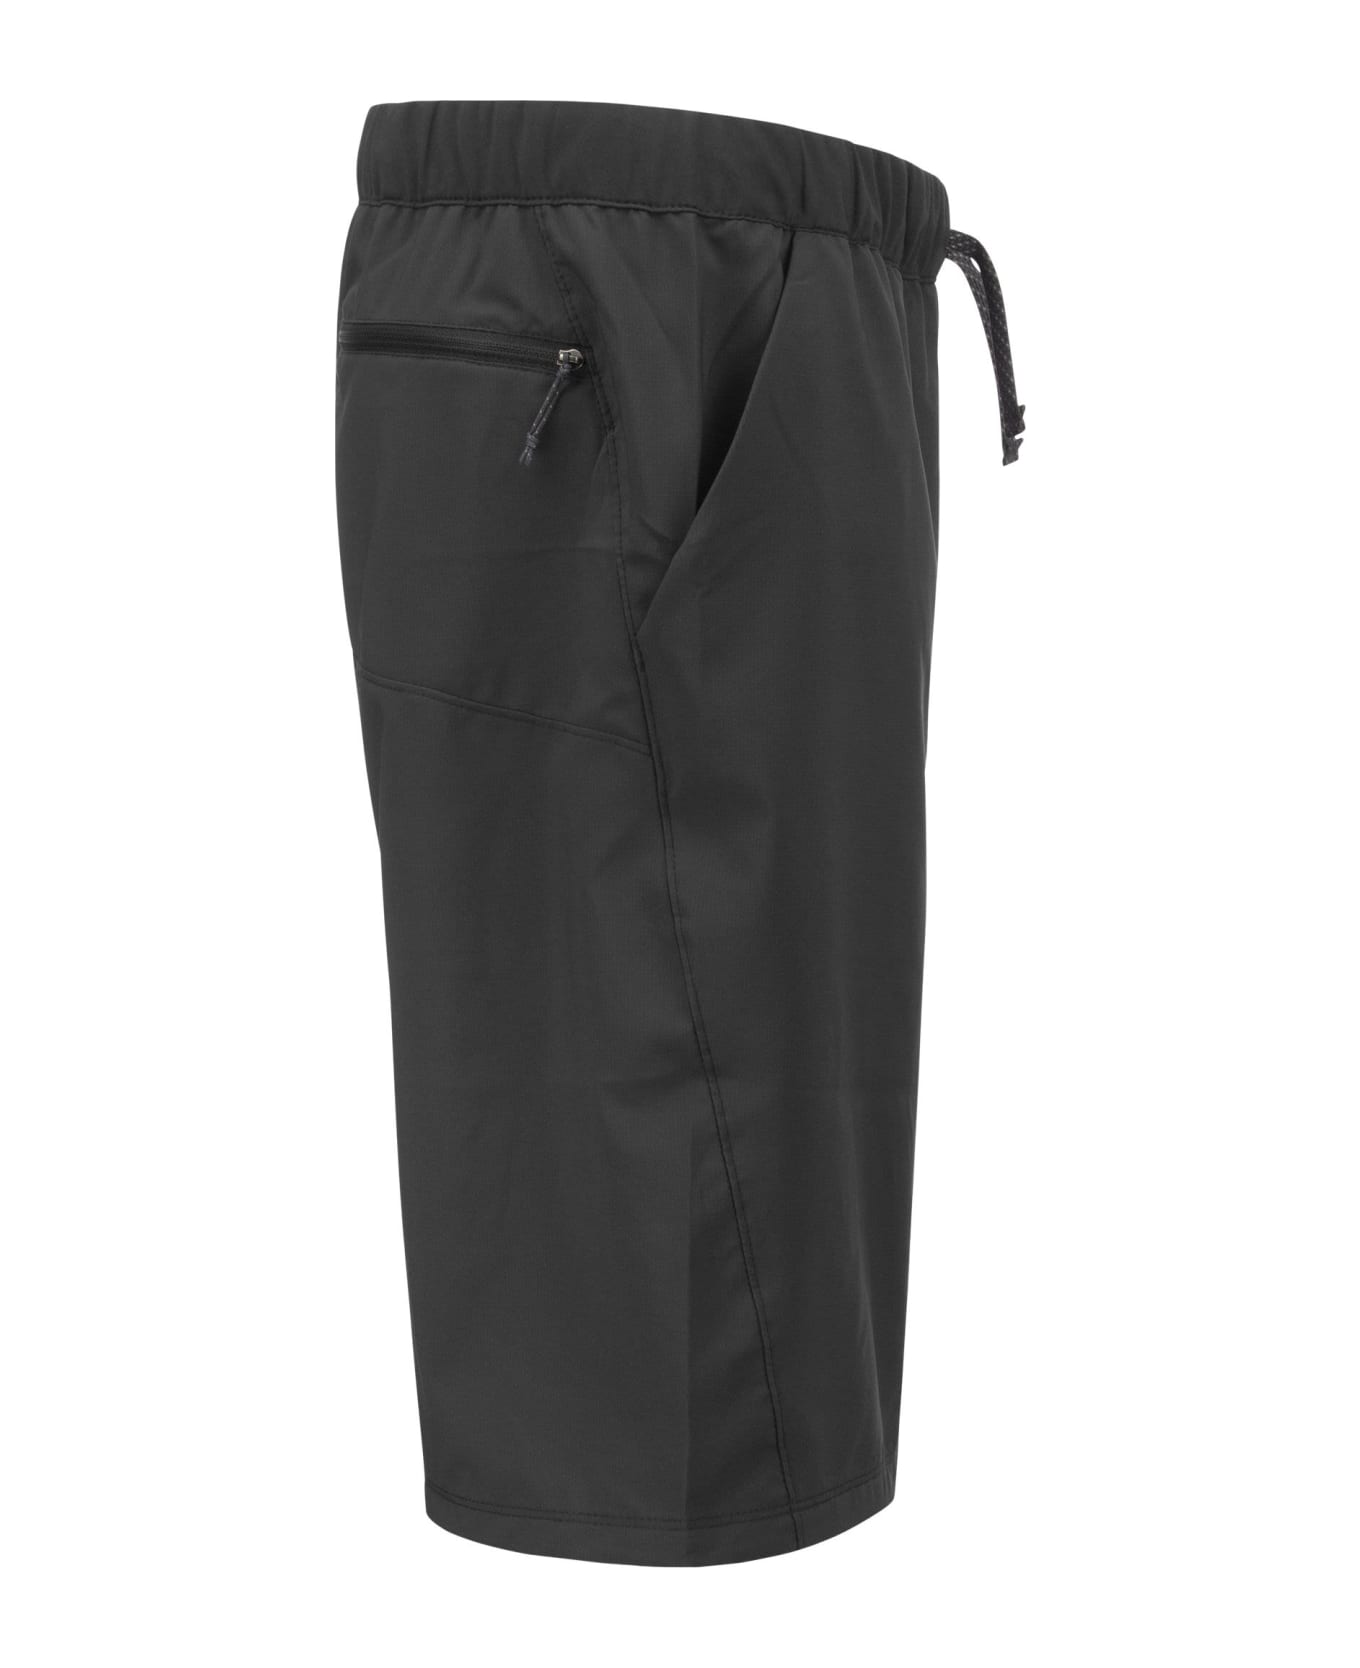 Patagonia Terrebonne - Nylon Shorts - Black ショートパンツ